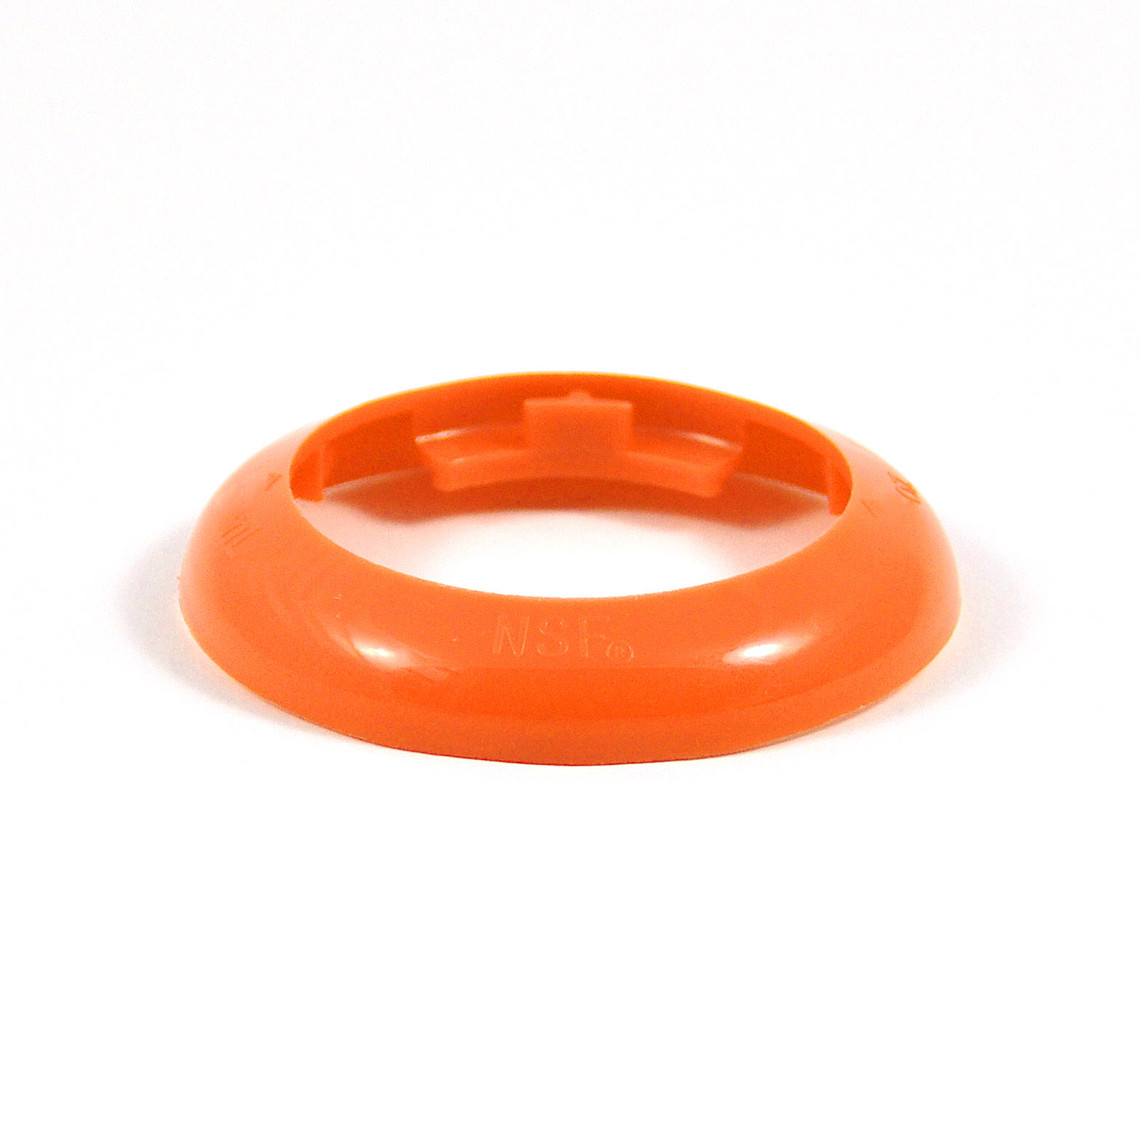 3/4oz (22.5ml) portion control ring